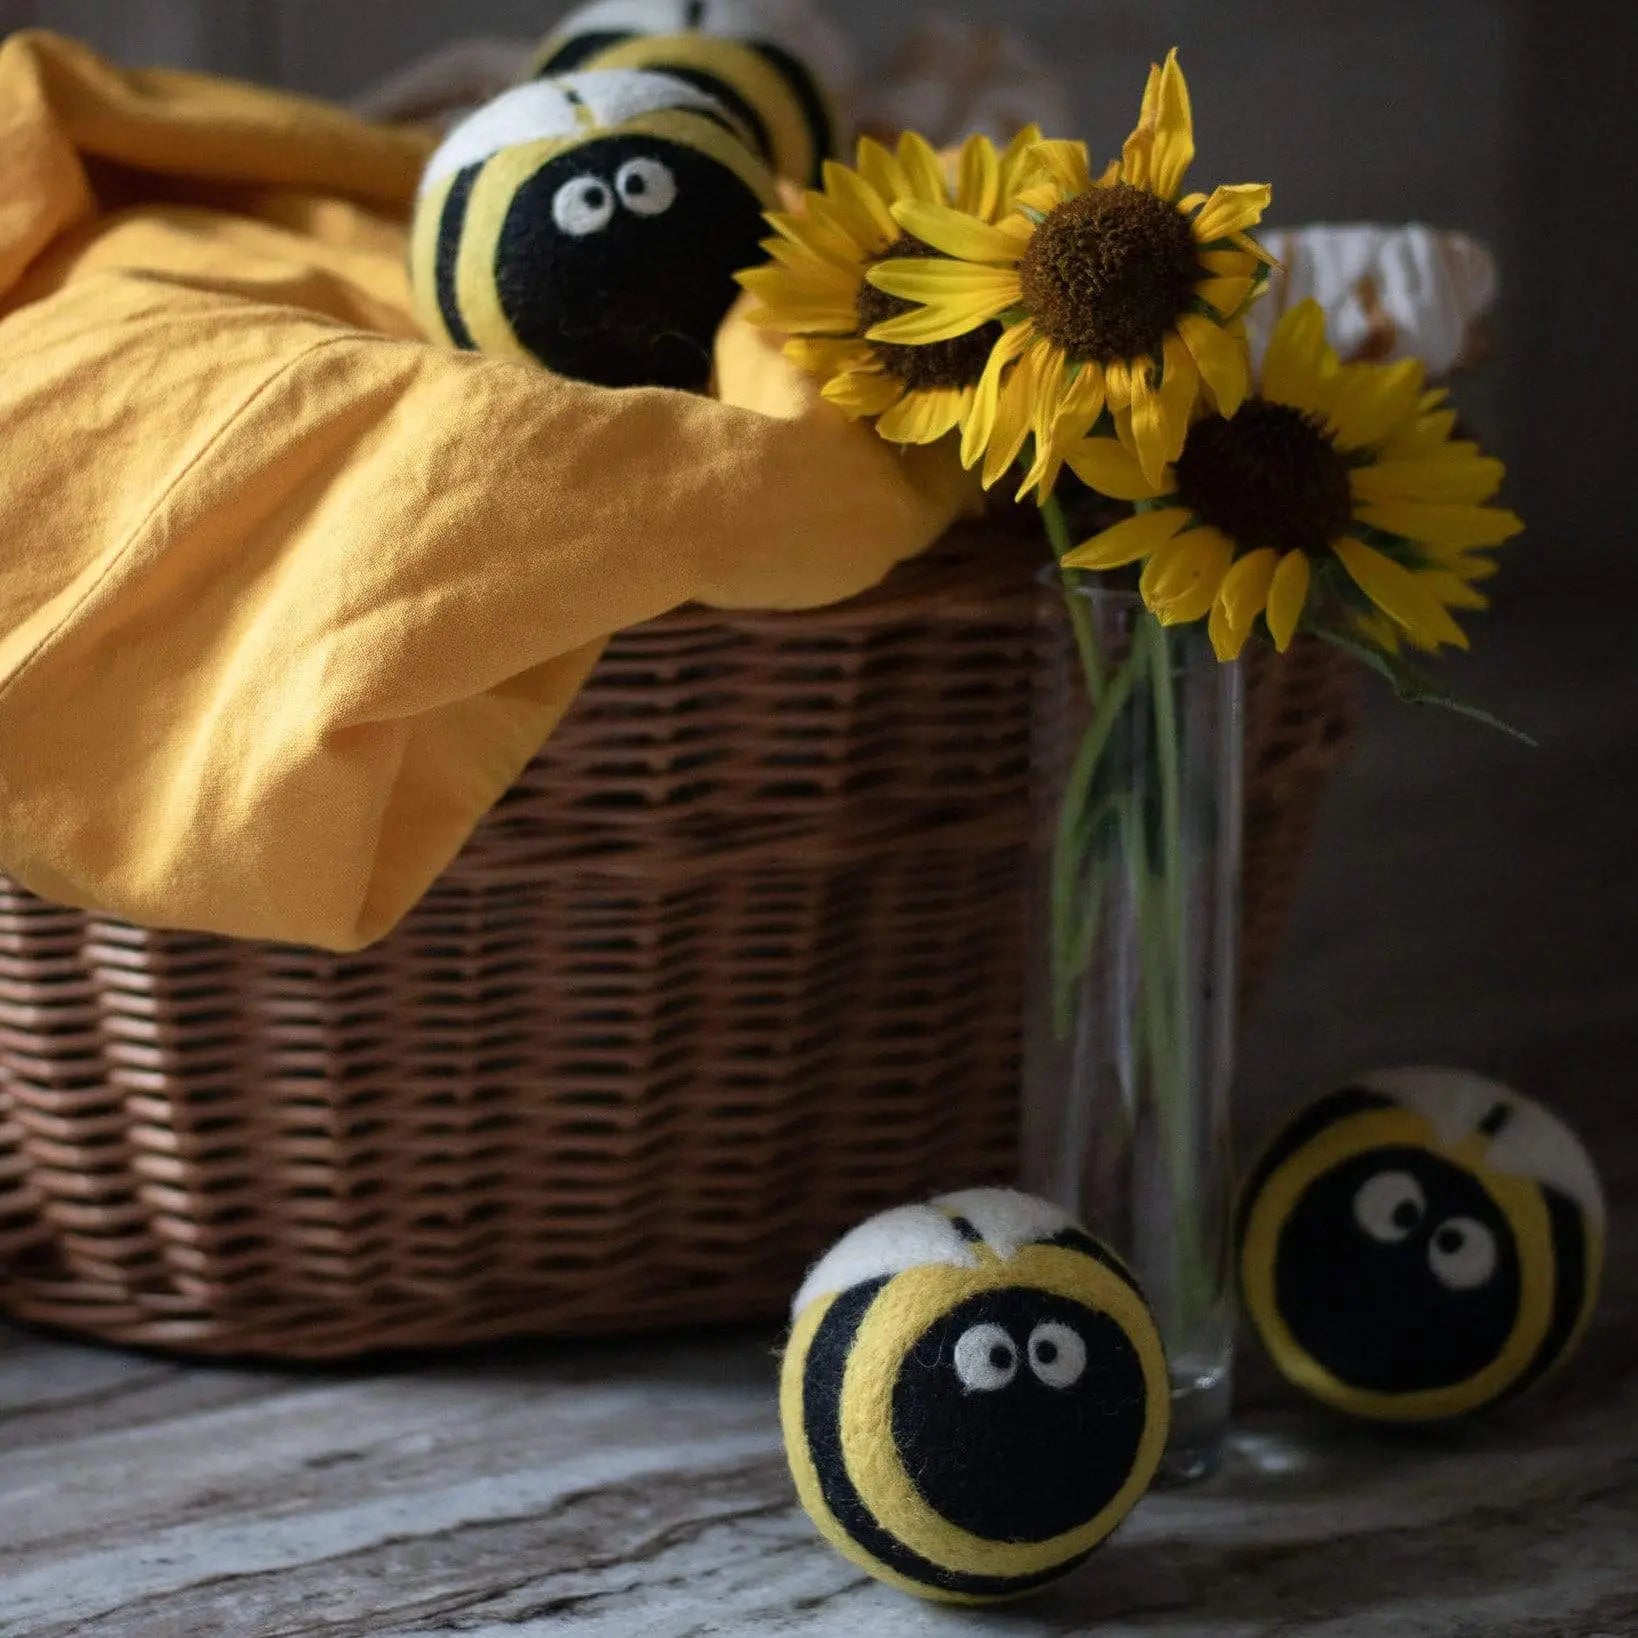 Friendsheep Busy Bees Eco Dryer Balls Friendsheep